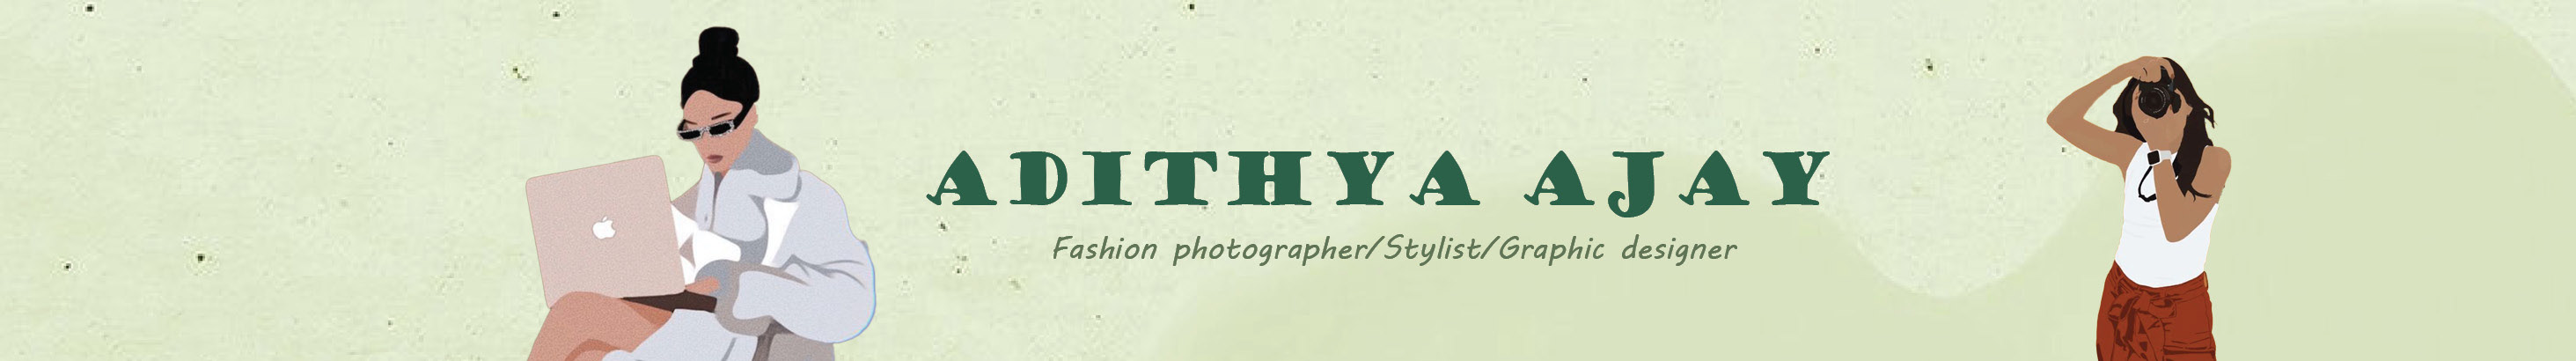 Profielbanner van Adithya Ajay